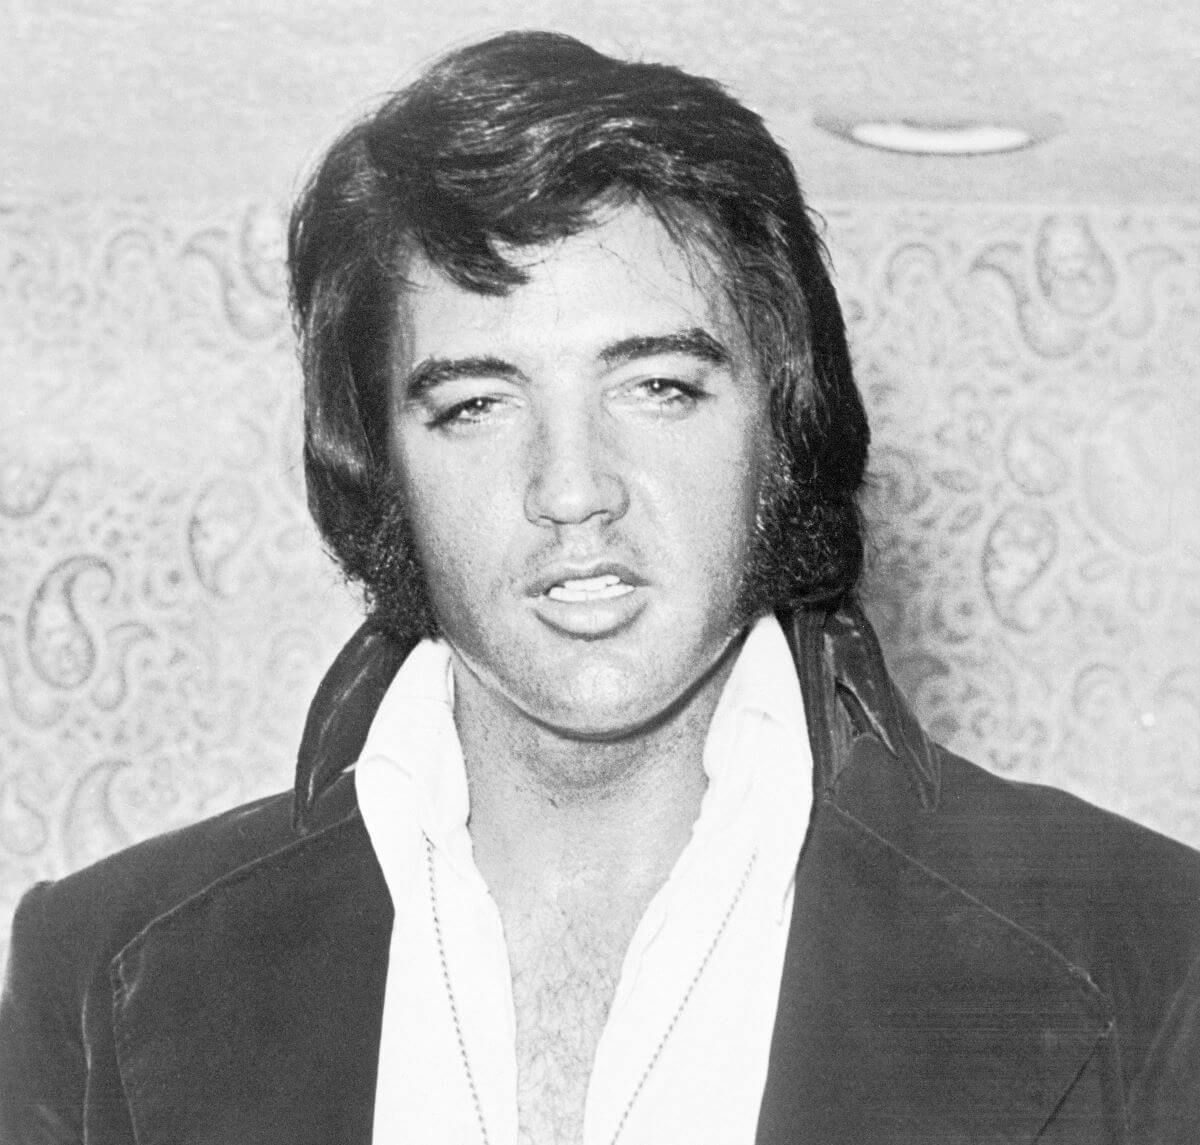 Elvis Revealed His 1 Major Career Regret